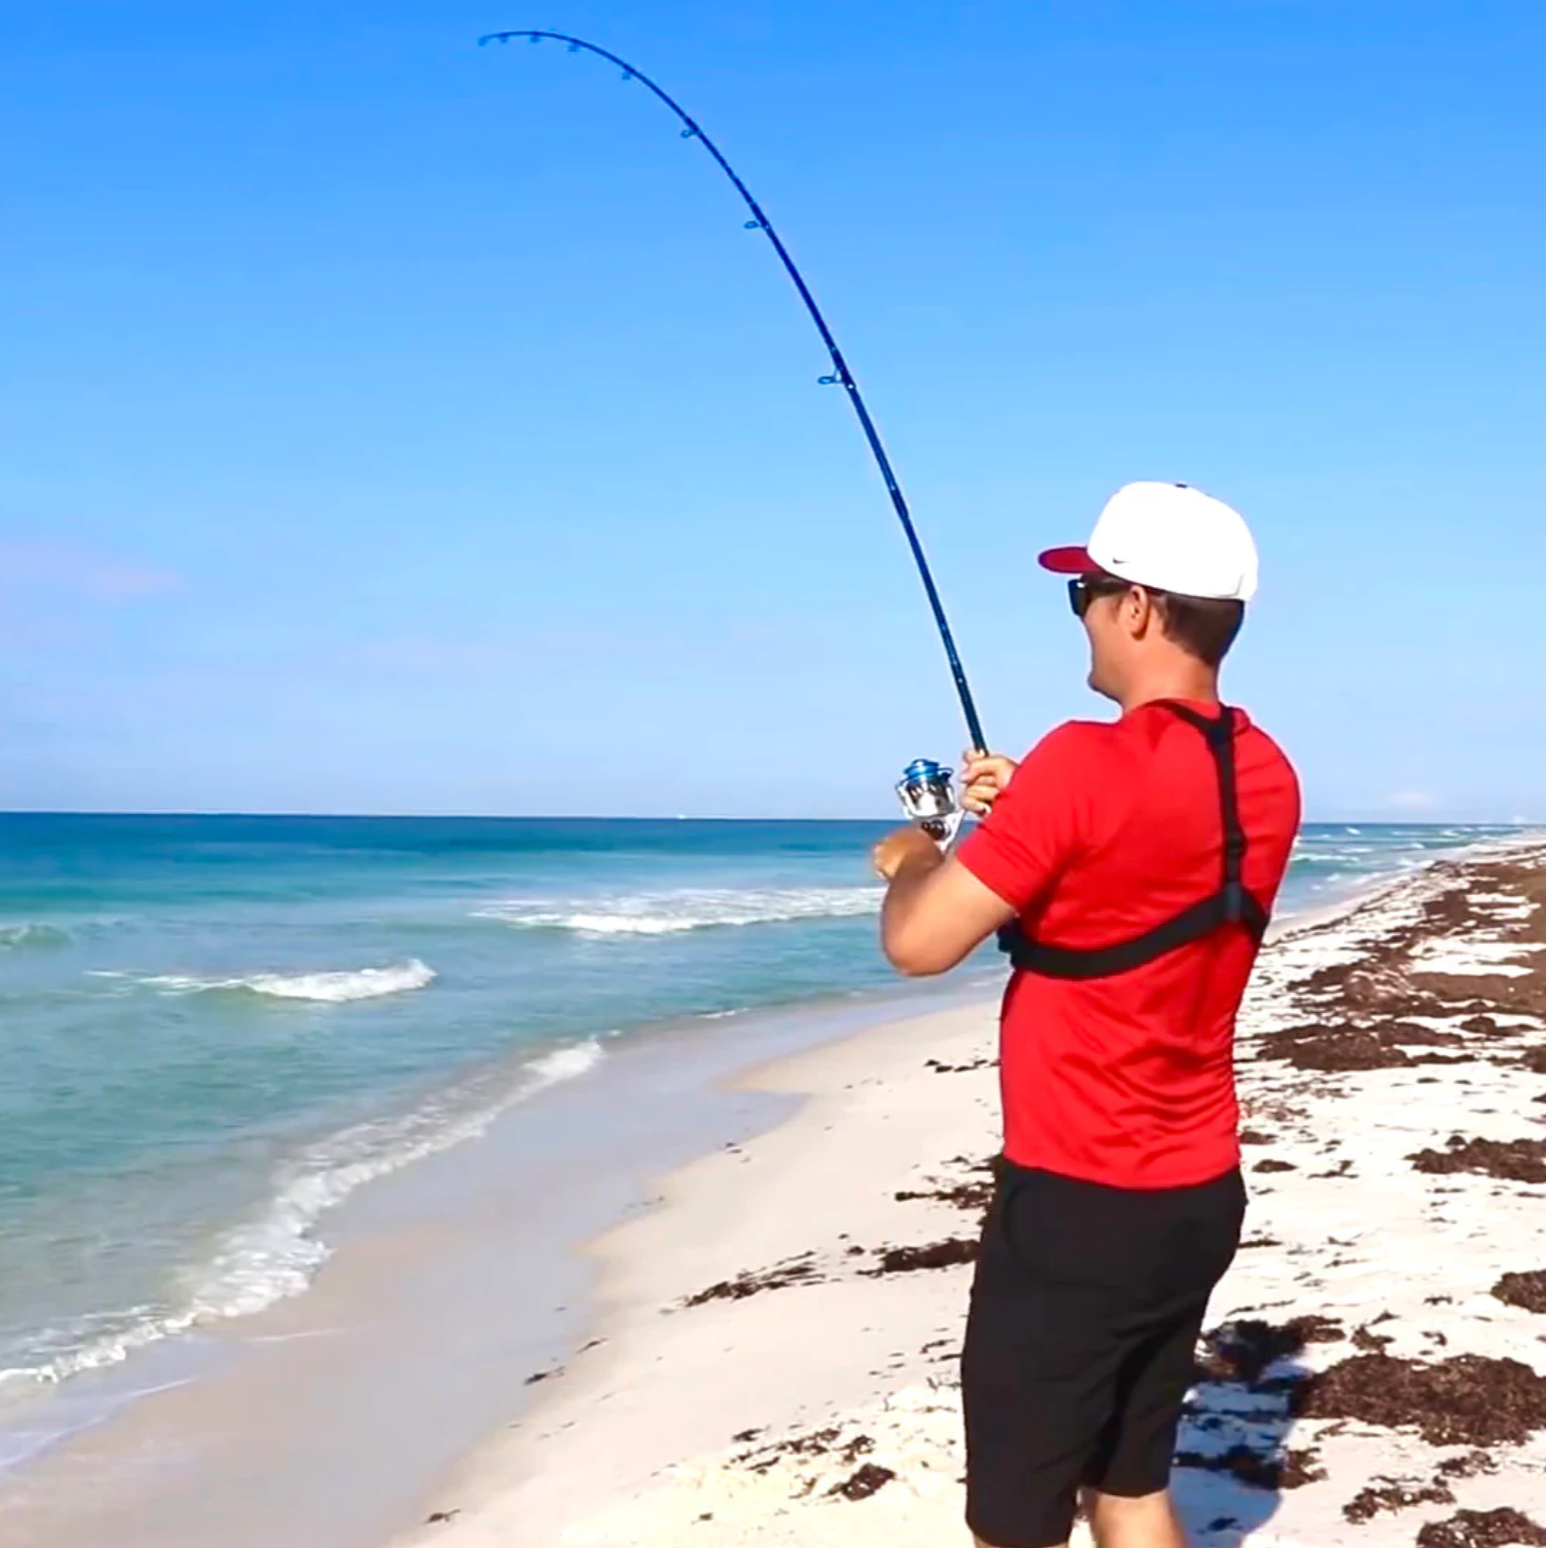 Brad's Ultimate Surf Fishing Combo – Beach Bum Outdoors